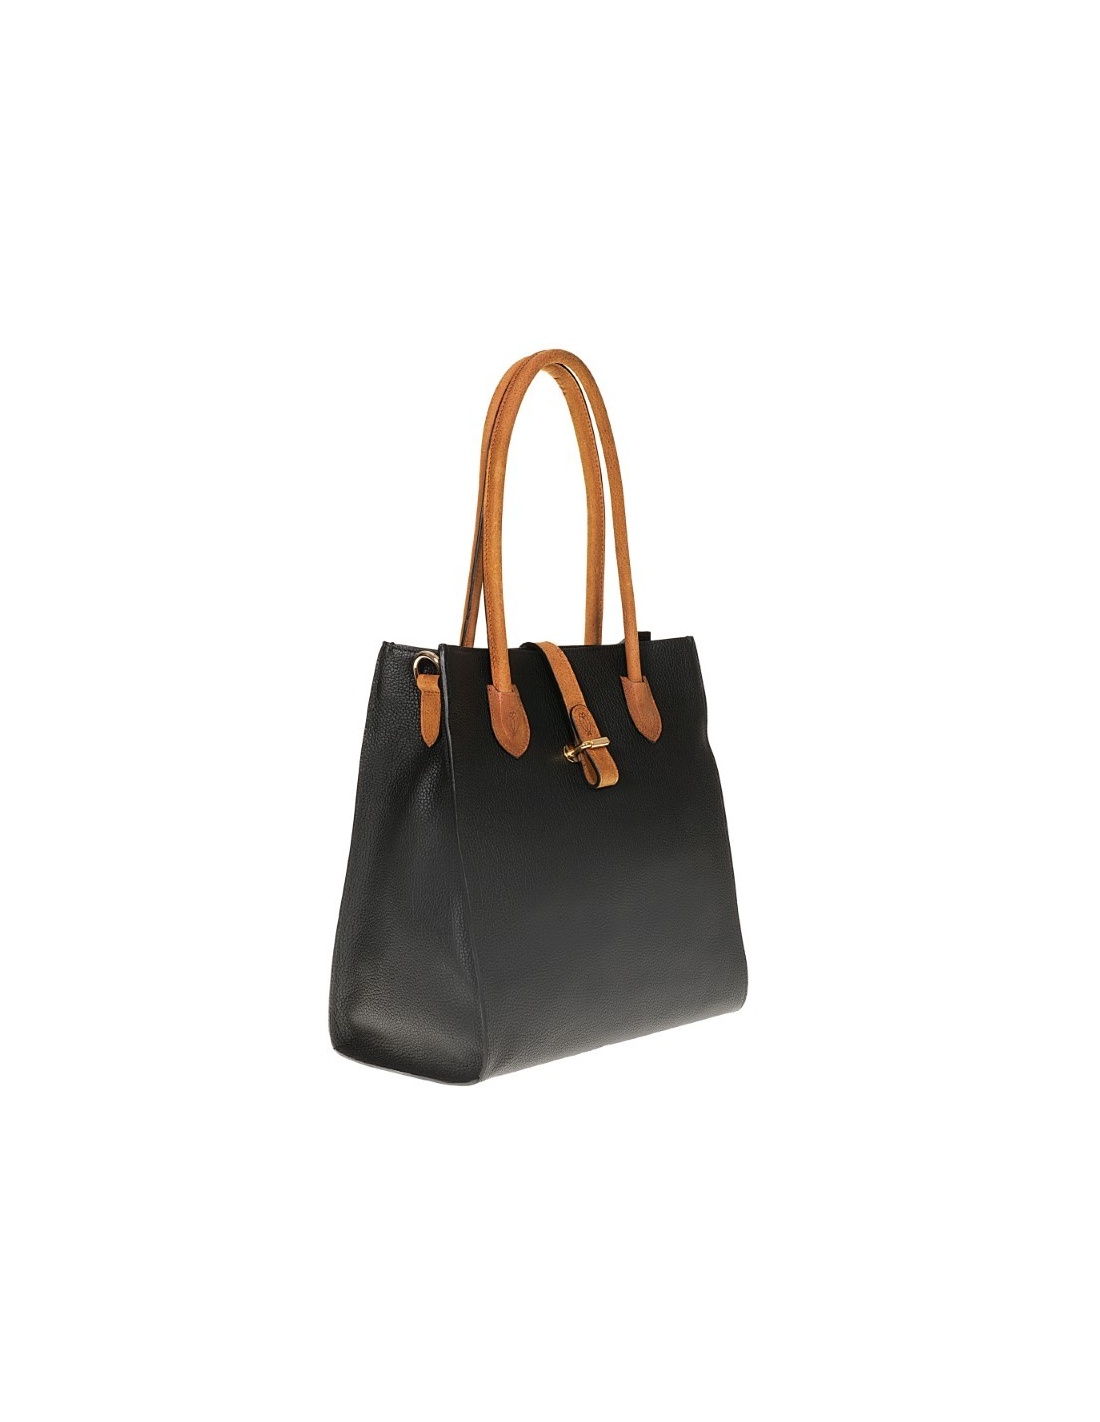 Longchamp 'Roseau' Leather Top Handle Shoulder Tote Handbag, Black